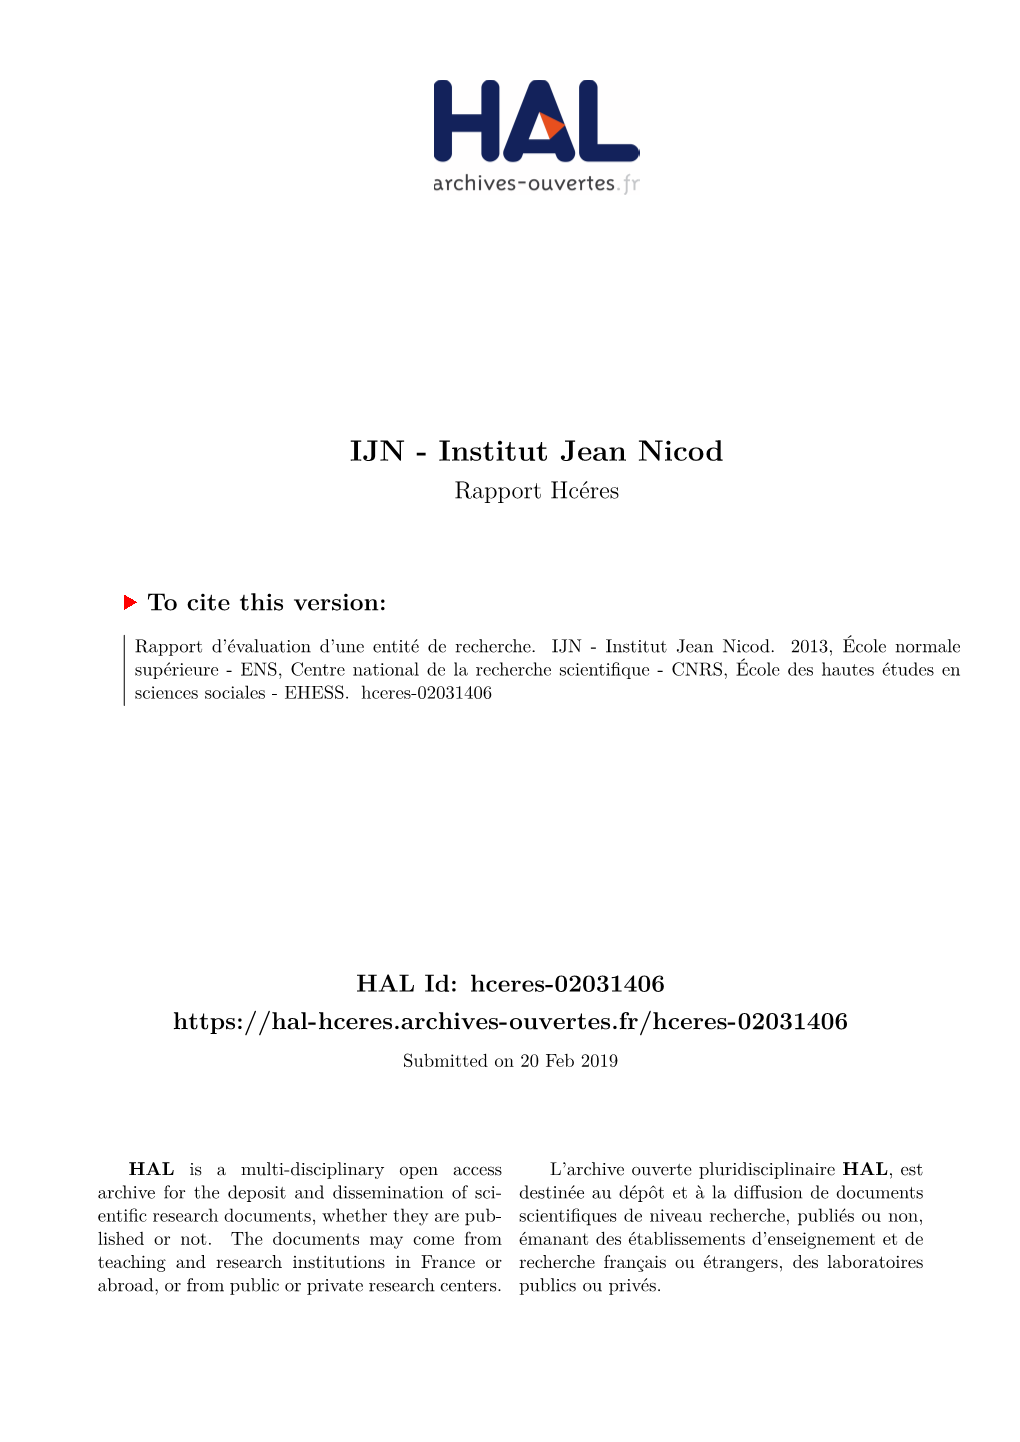 IJN - Institut Jean Nicod Rapport Hcéres